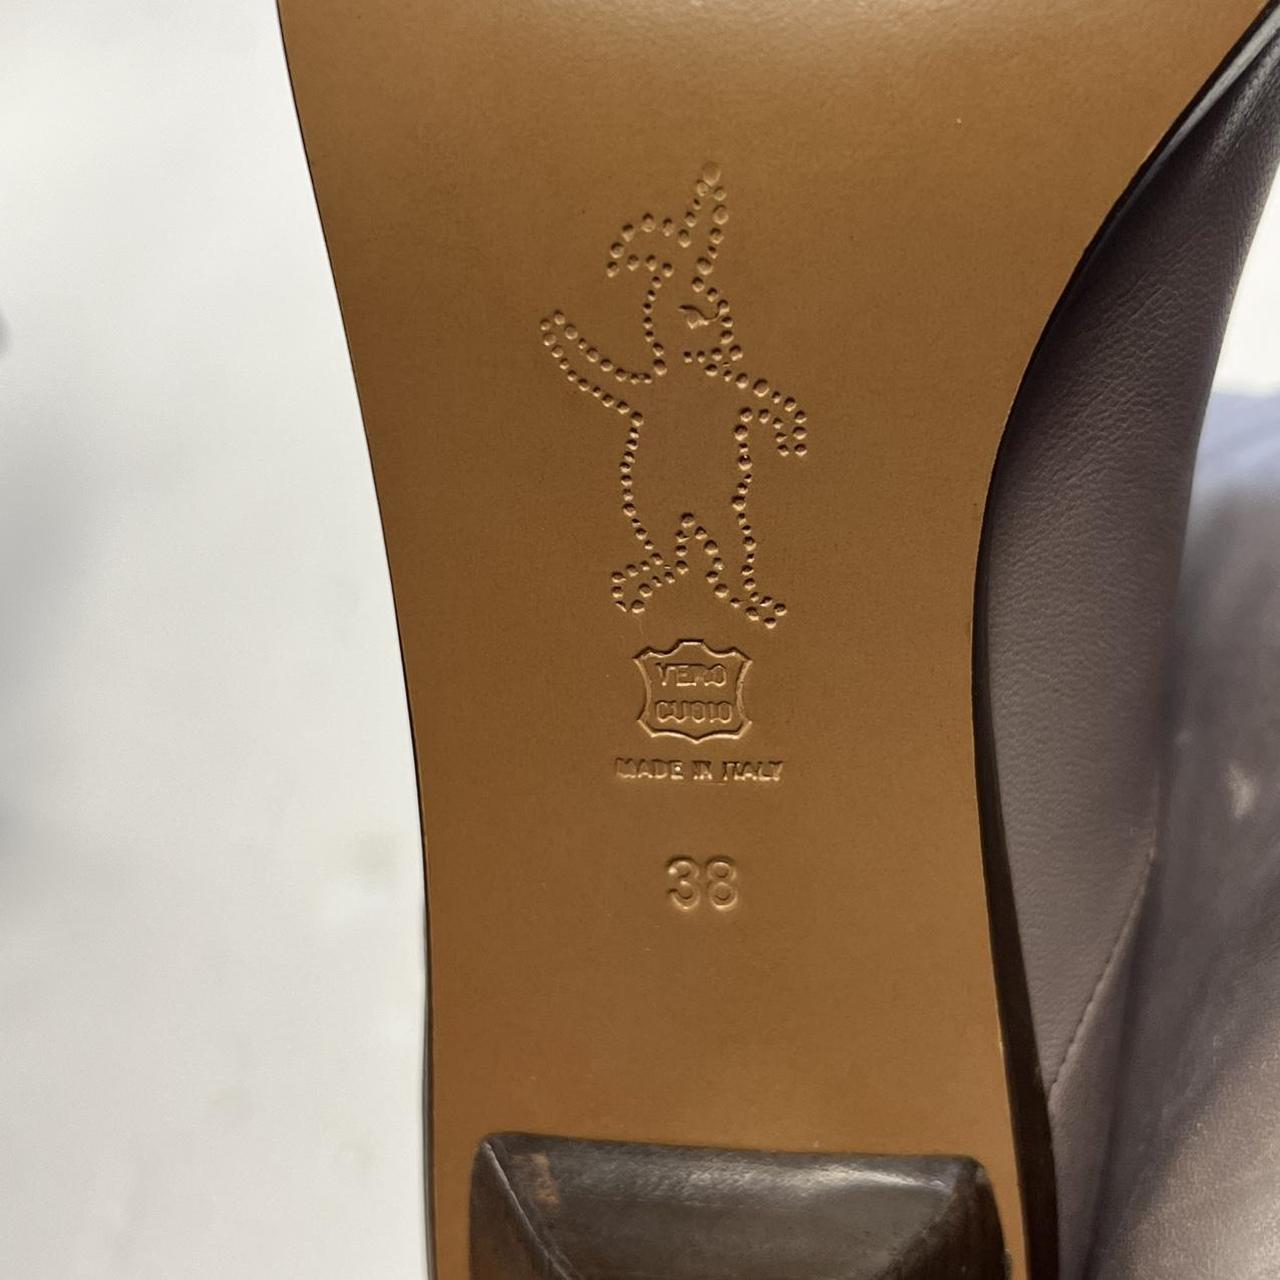 Product Image 4 - Marni Heel Boots

Measurements

Heel: 2.5ins

Length: 15.5ins

Calf: